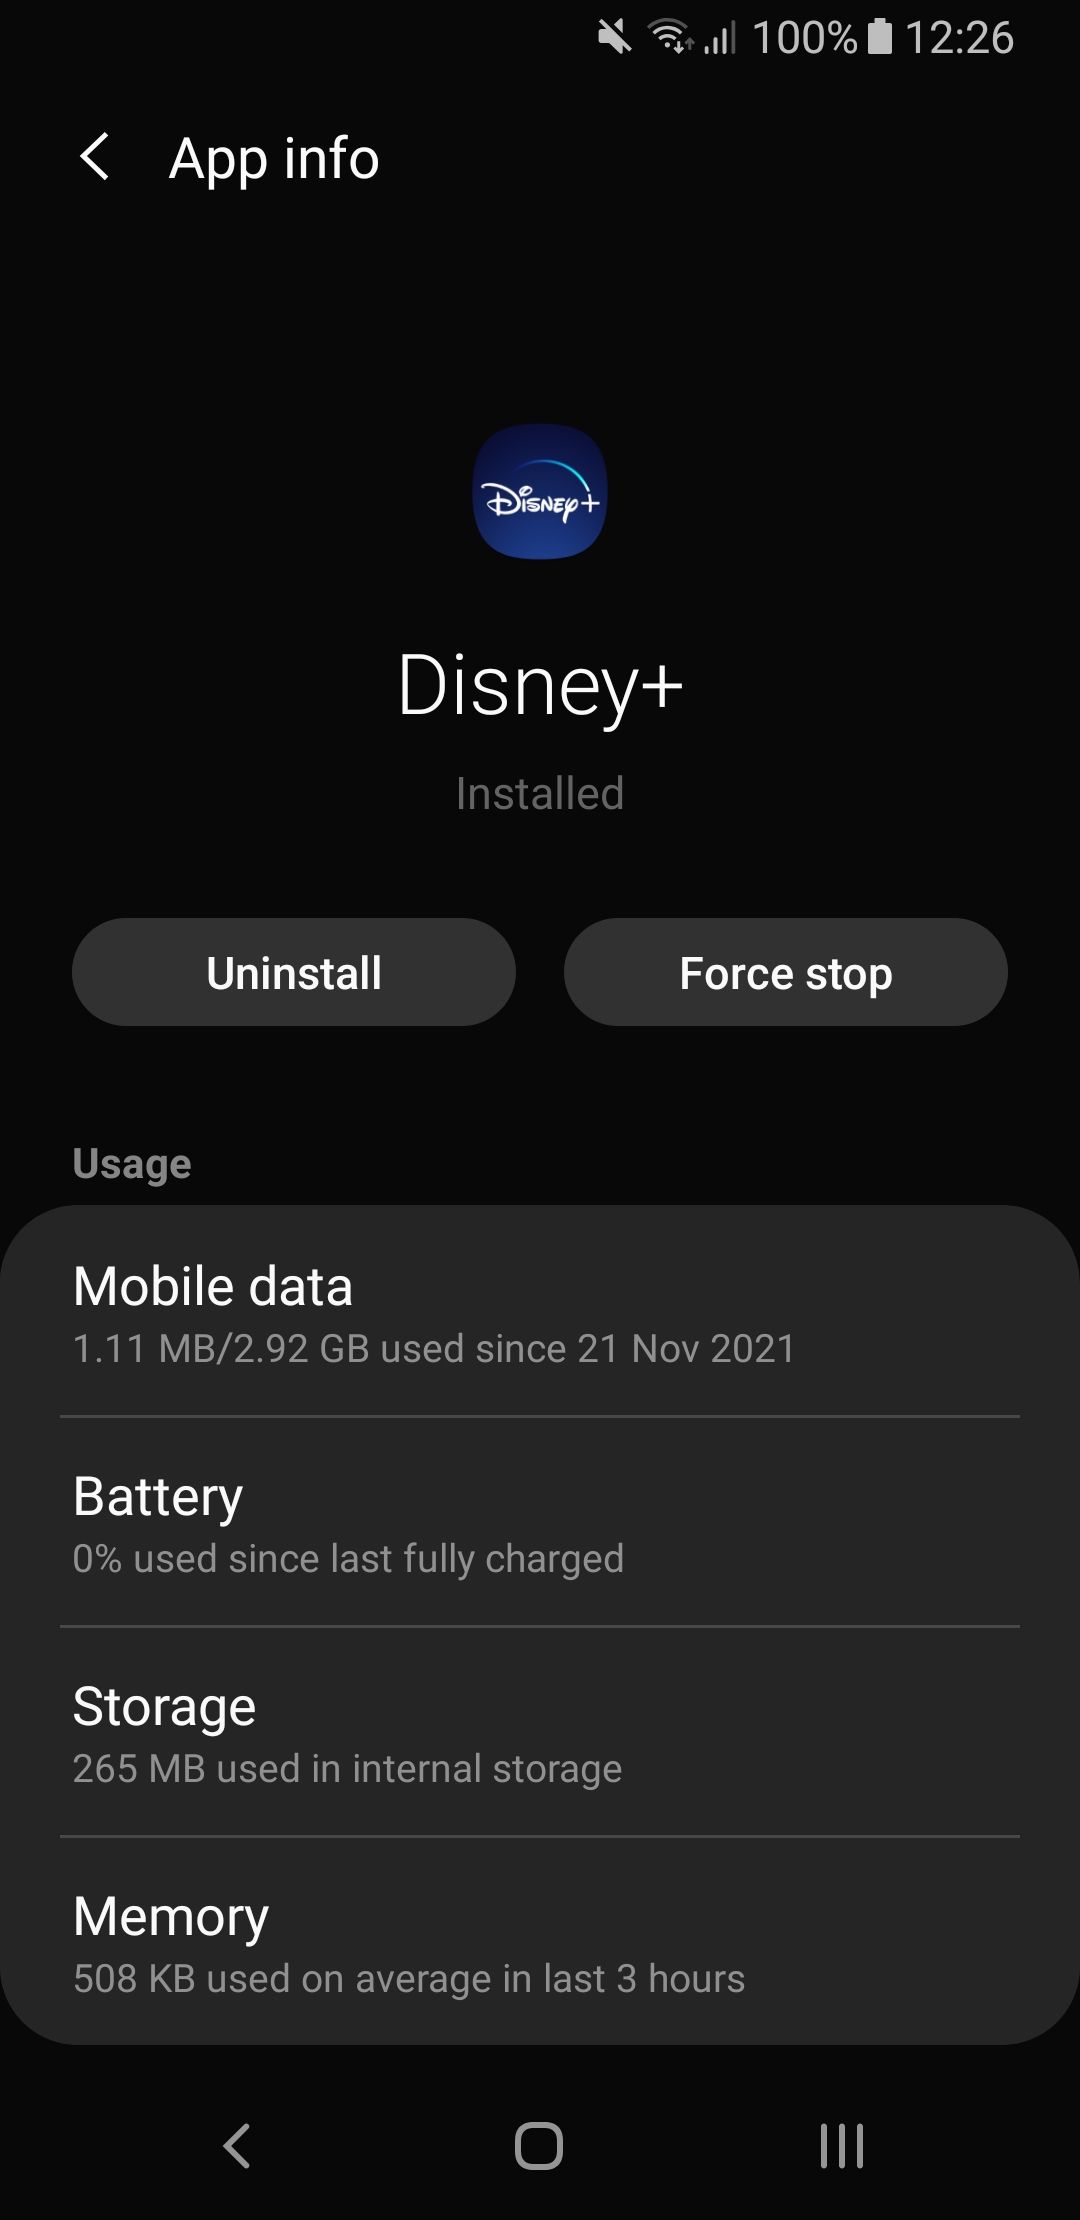 android phone disney+ app info